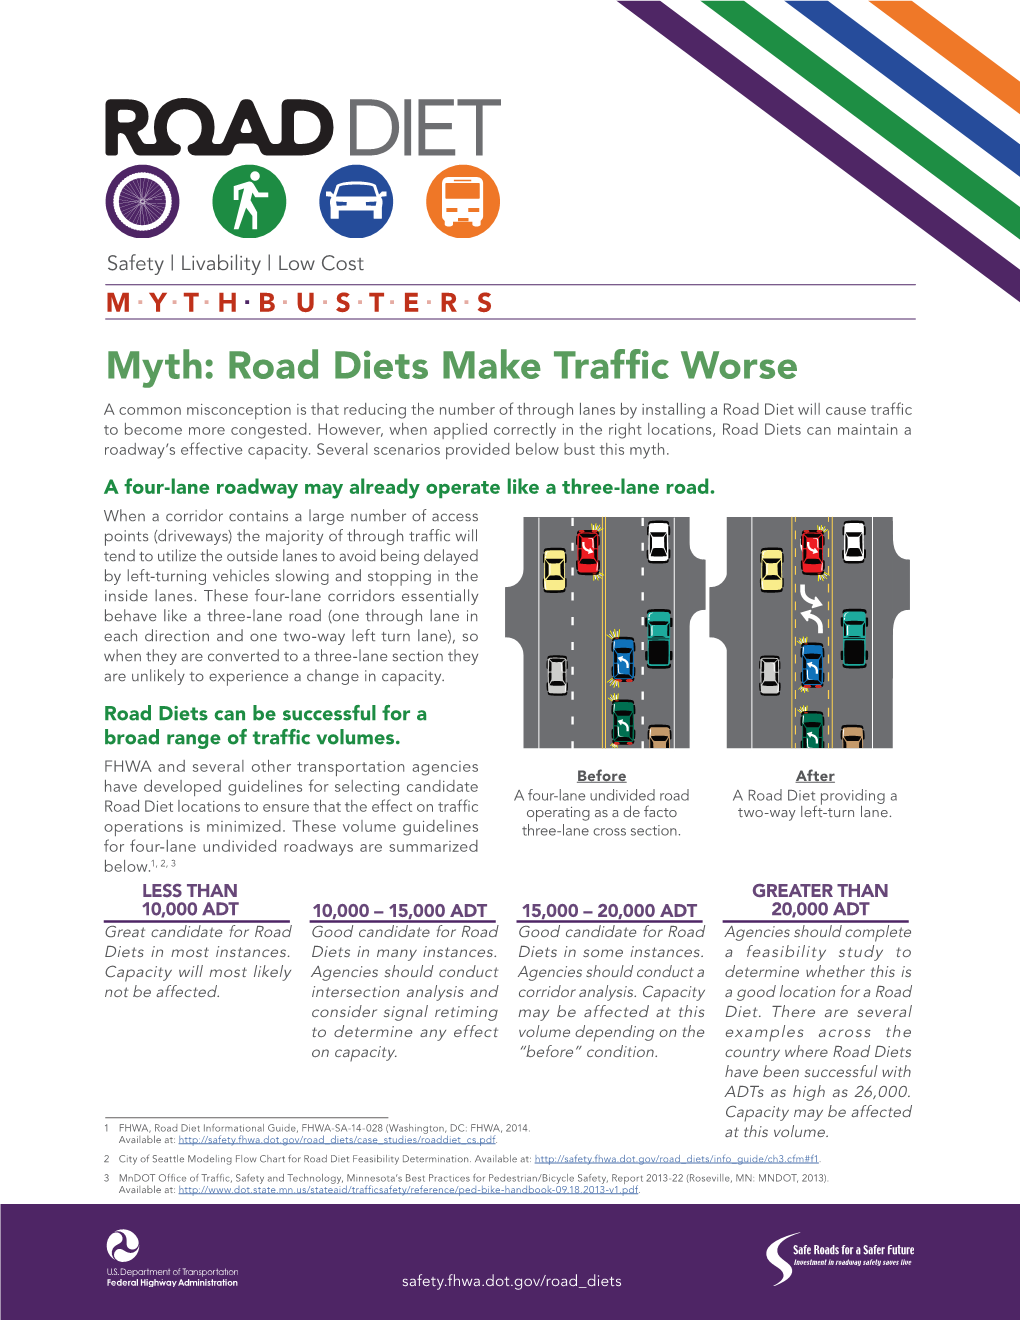 Myth: Road Diets Make Traffic Worse